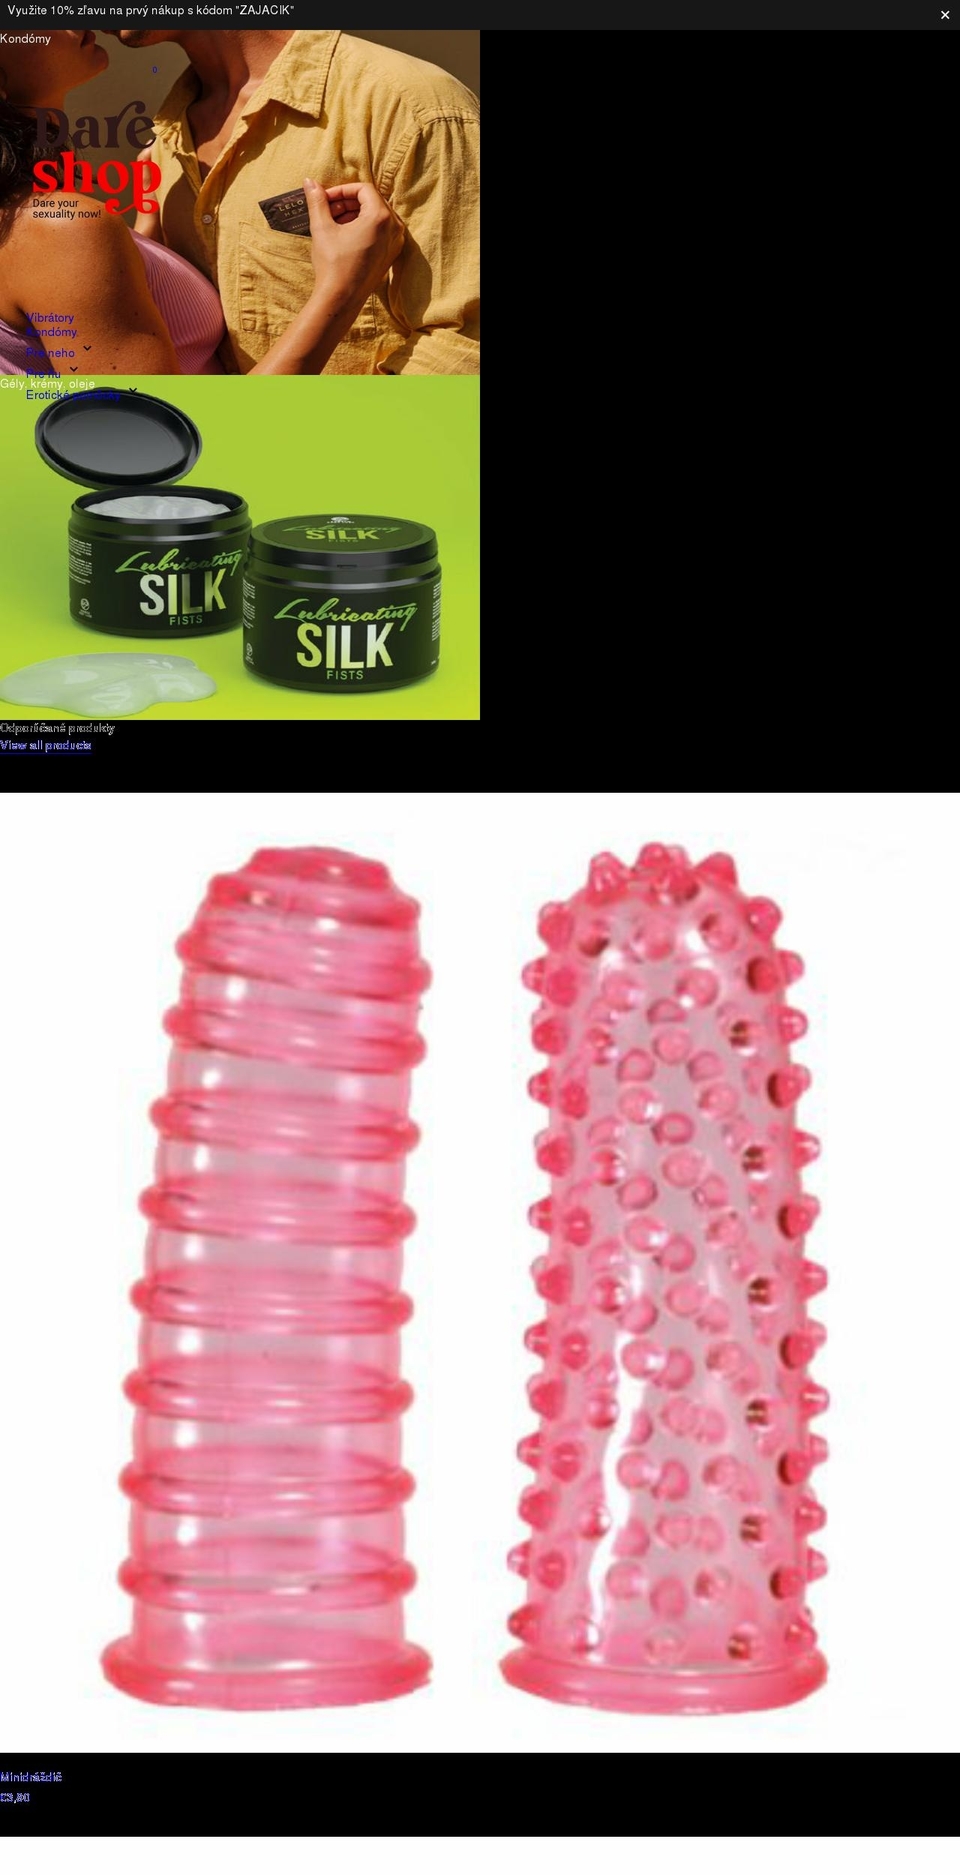 sexshopdares.sk shopify website screenshot